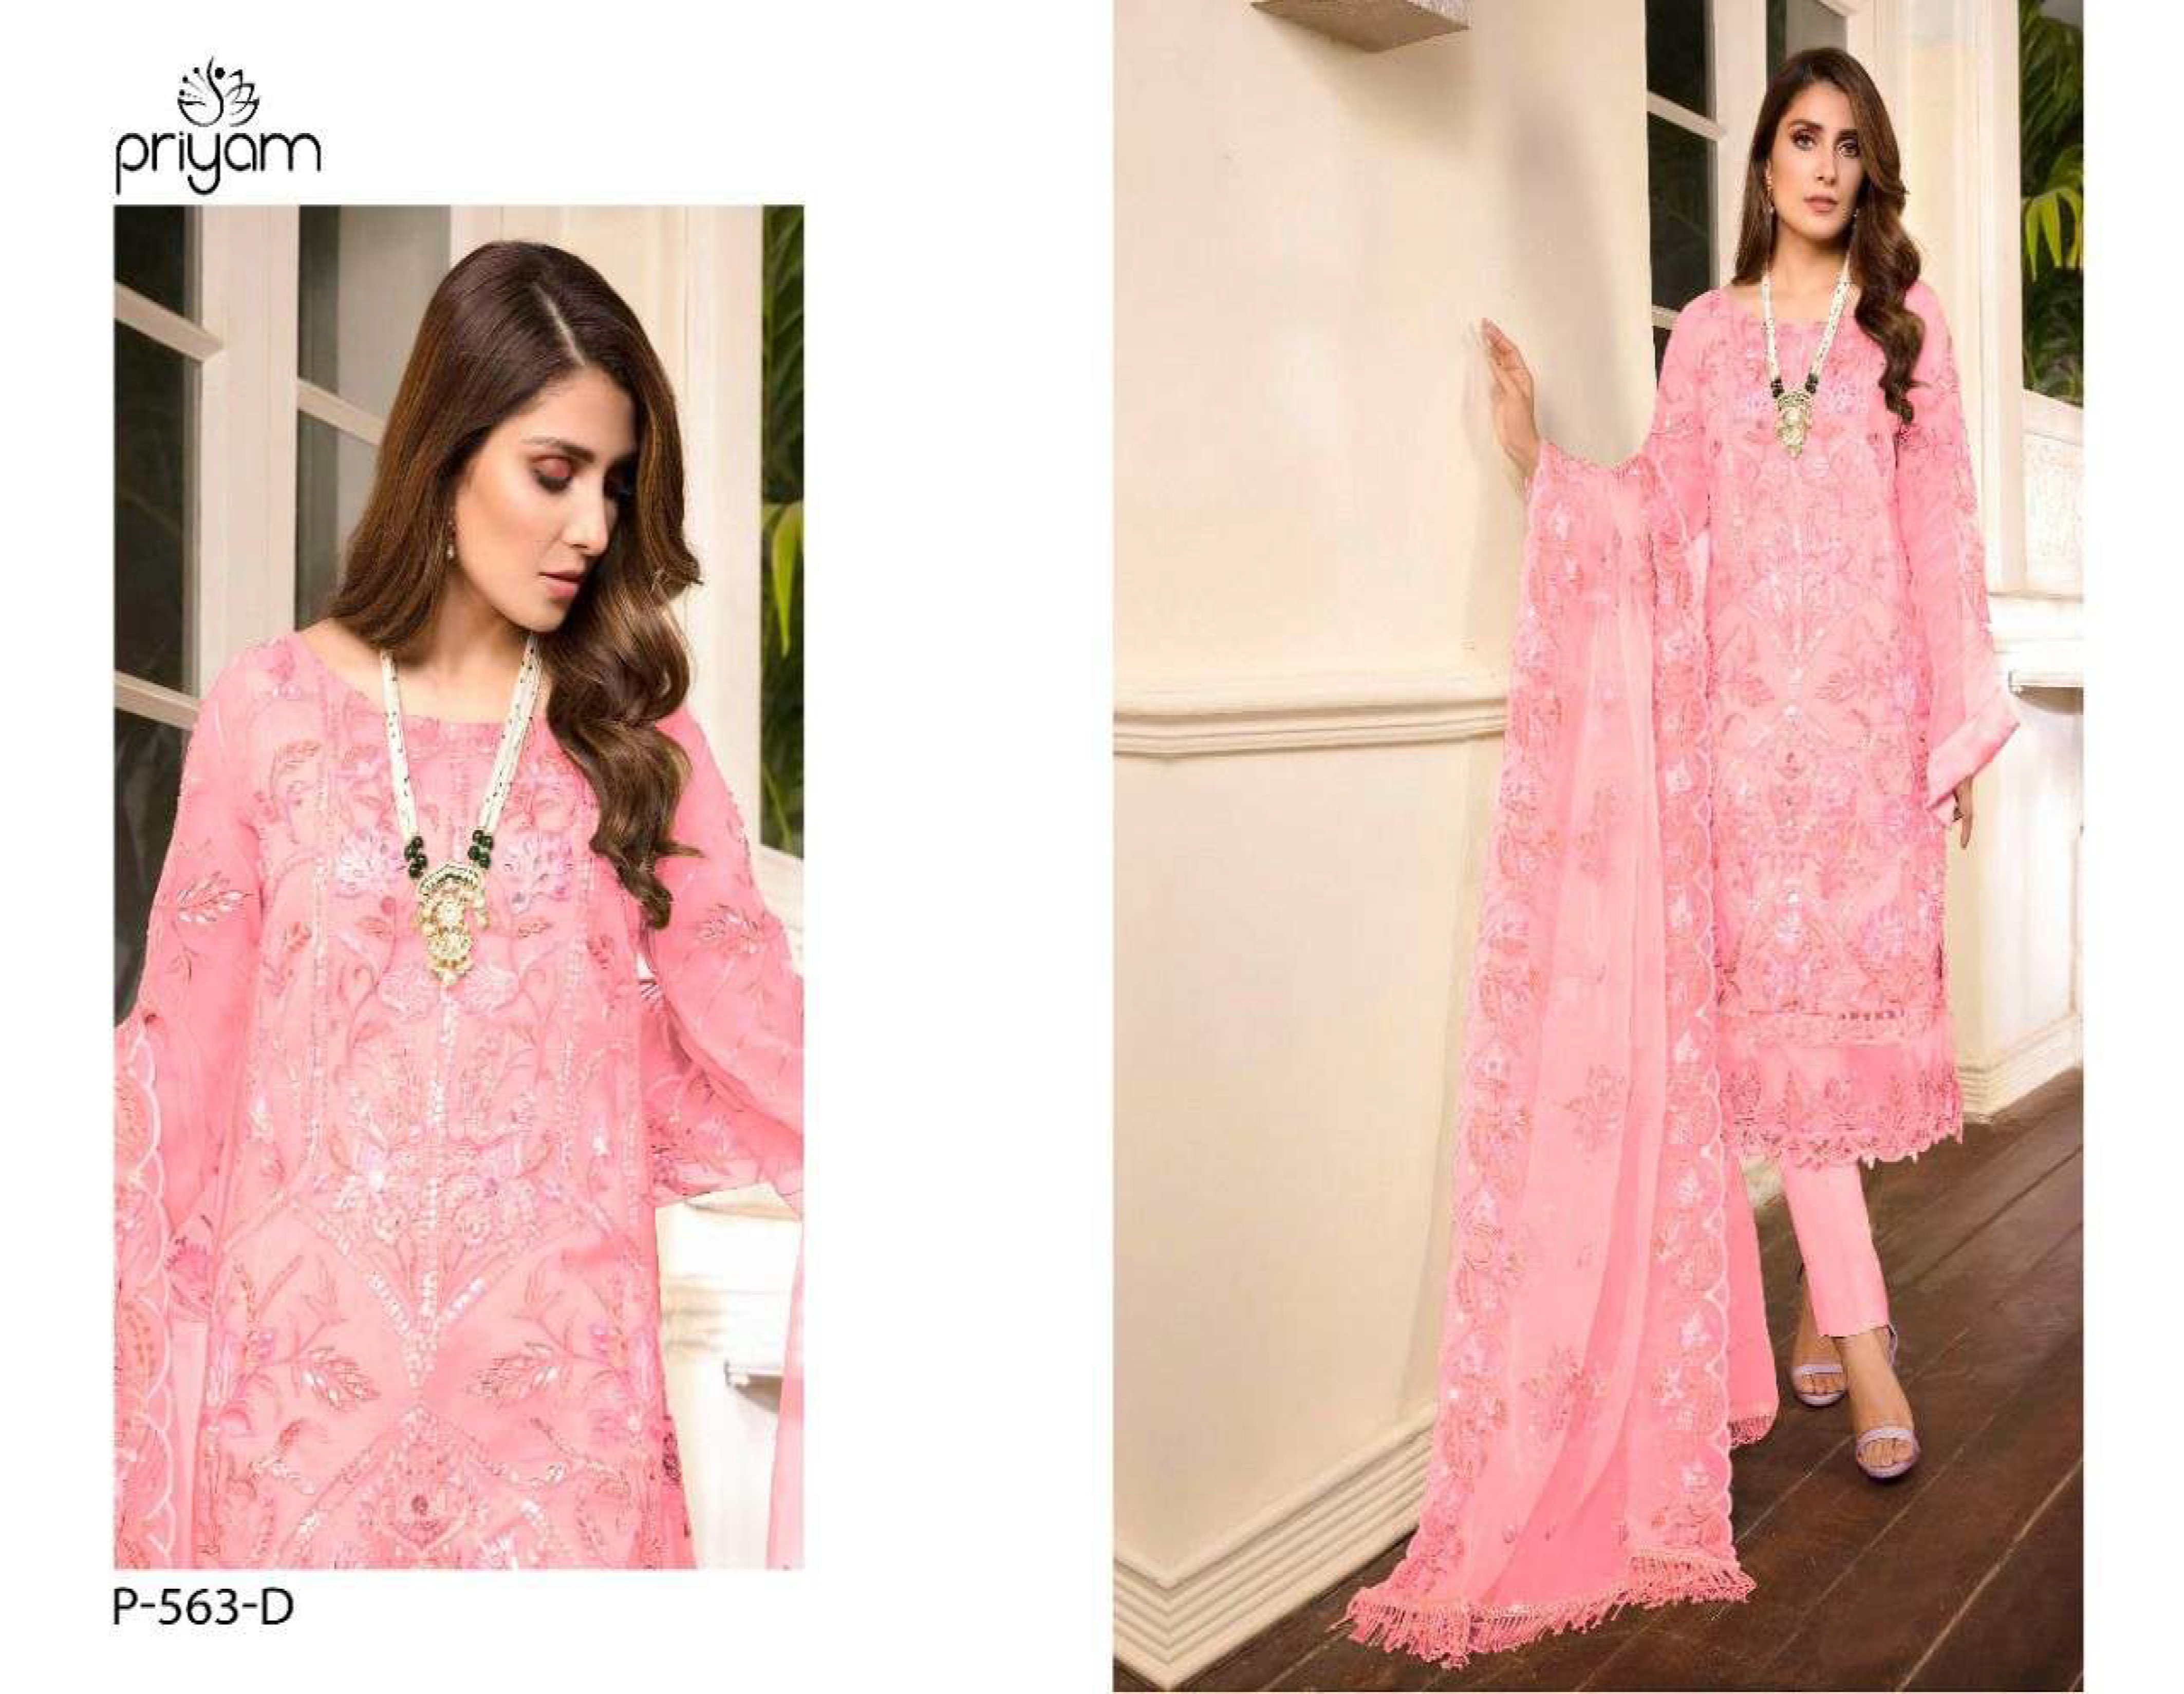 Priyam Fashion Presents Latest Pakistani Concept Catalog Zaina Dn. 563a To 563e Wholesale Rate At Saidharanx